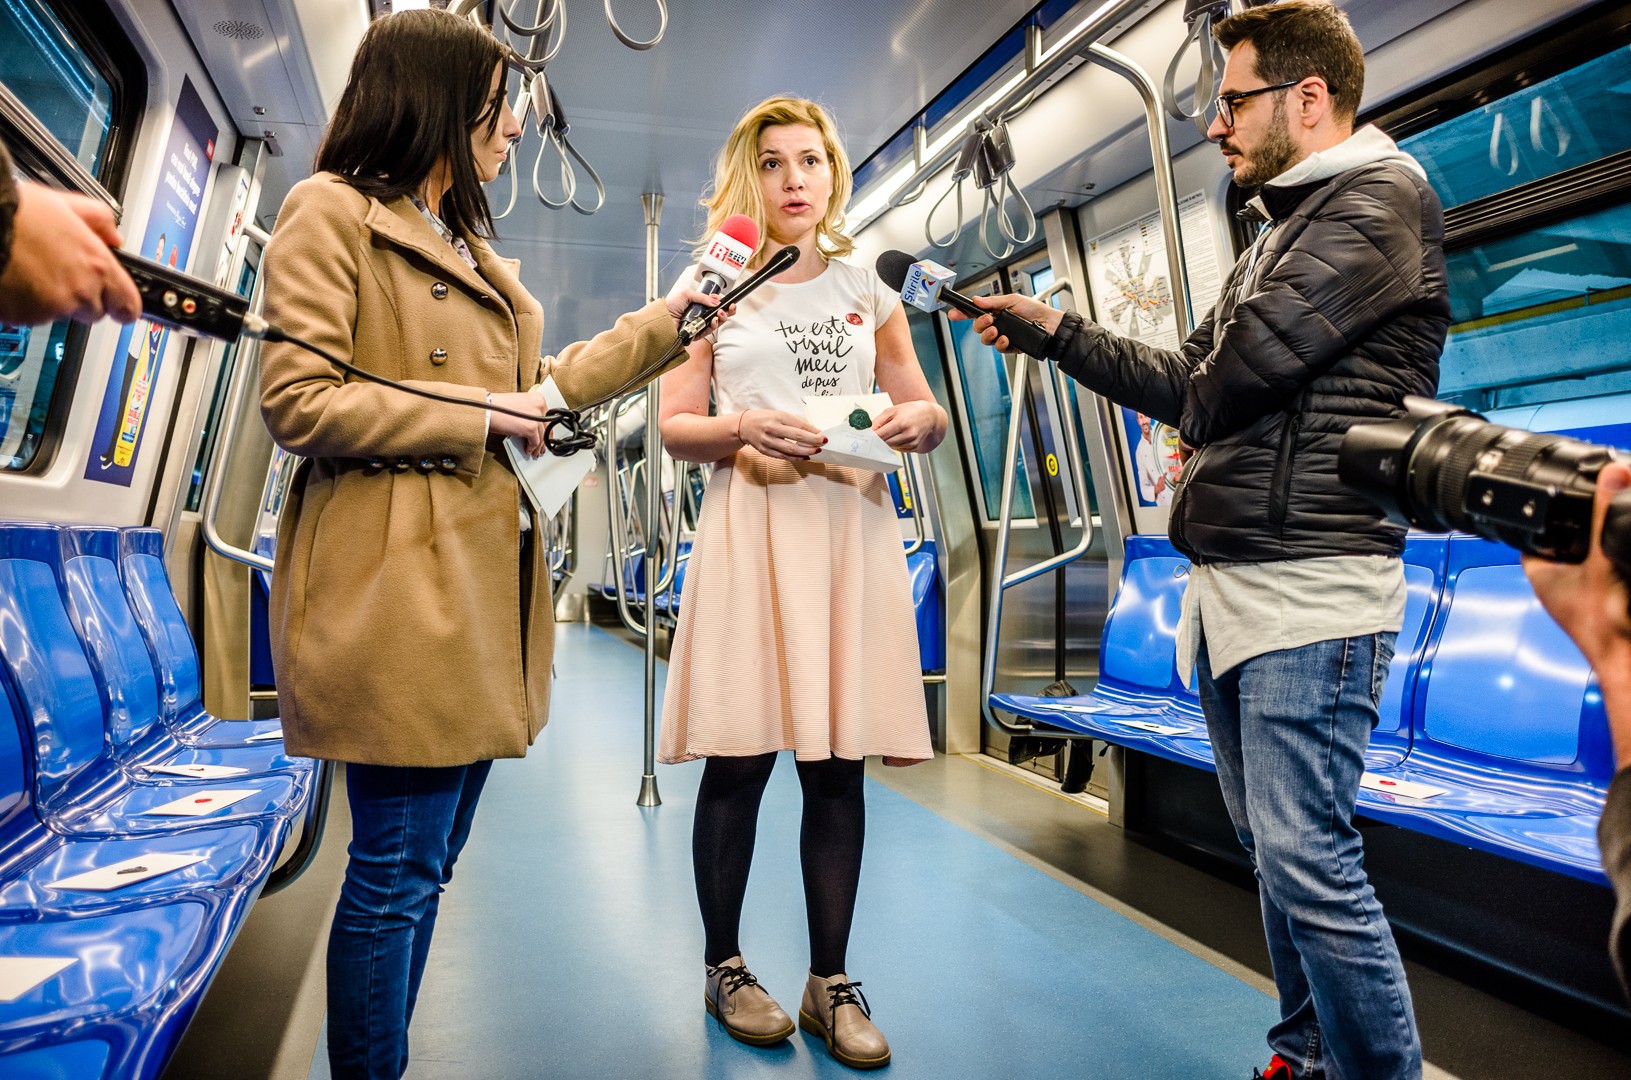 Interviu - Arta nu musca - Scrisori la metrou